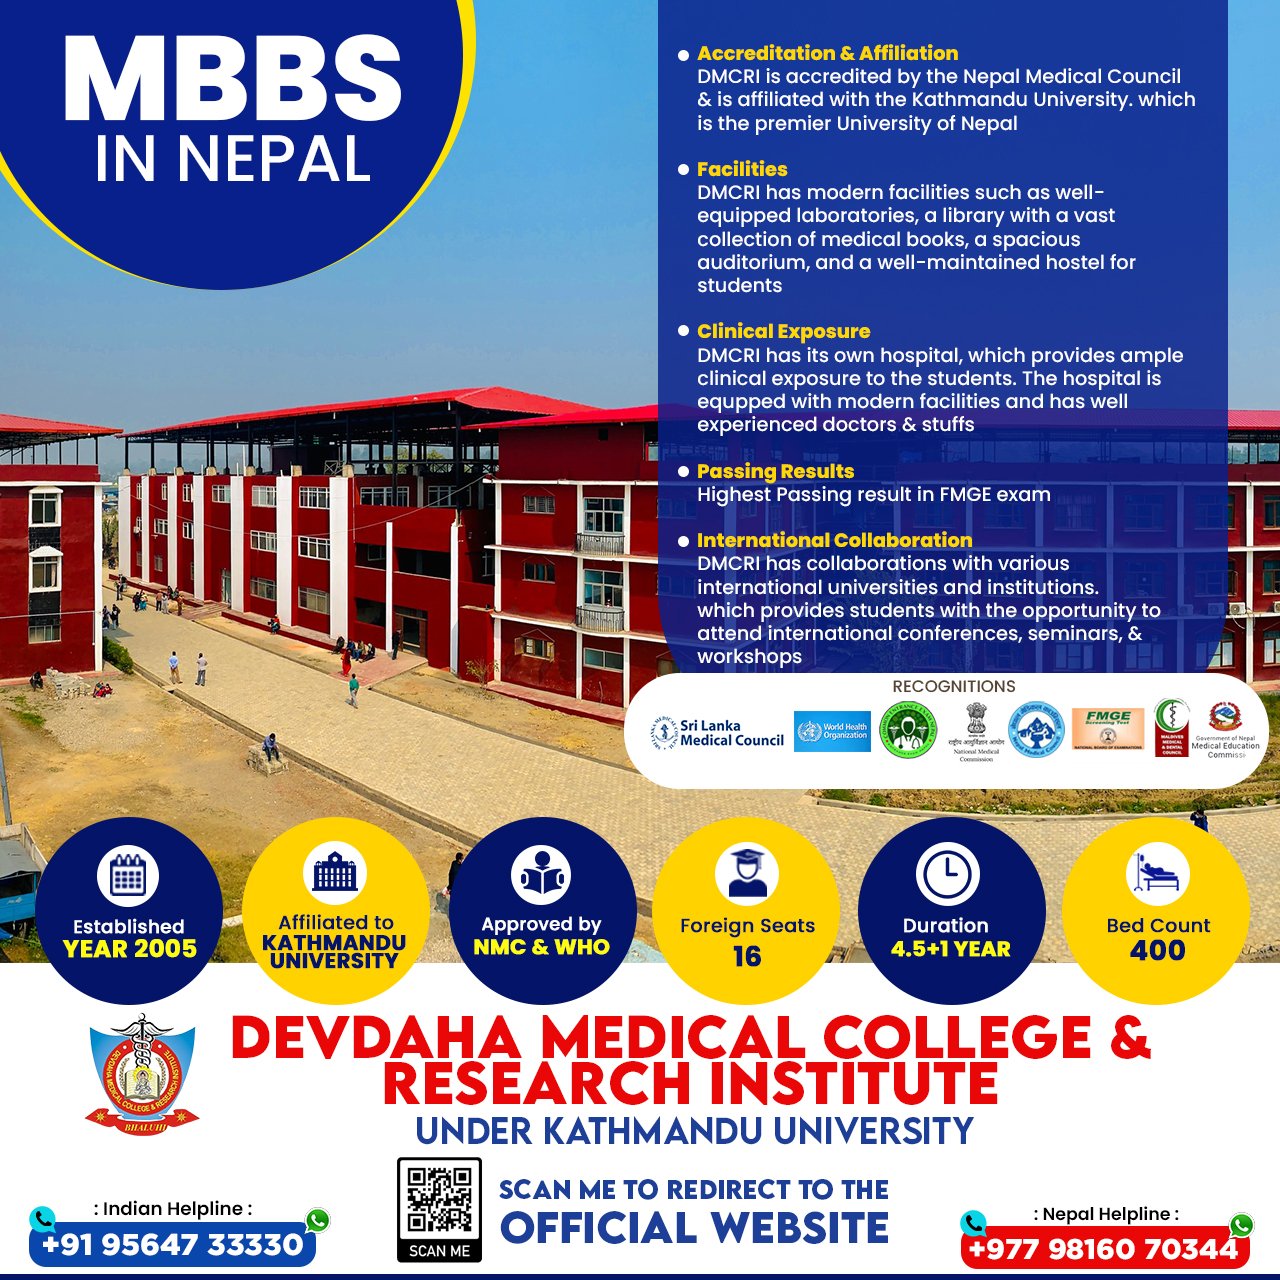 mbbs-in-nepal-at-devdaha-medical-college-under-kathmandu-university